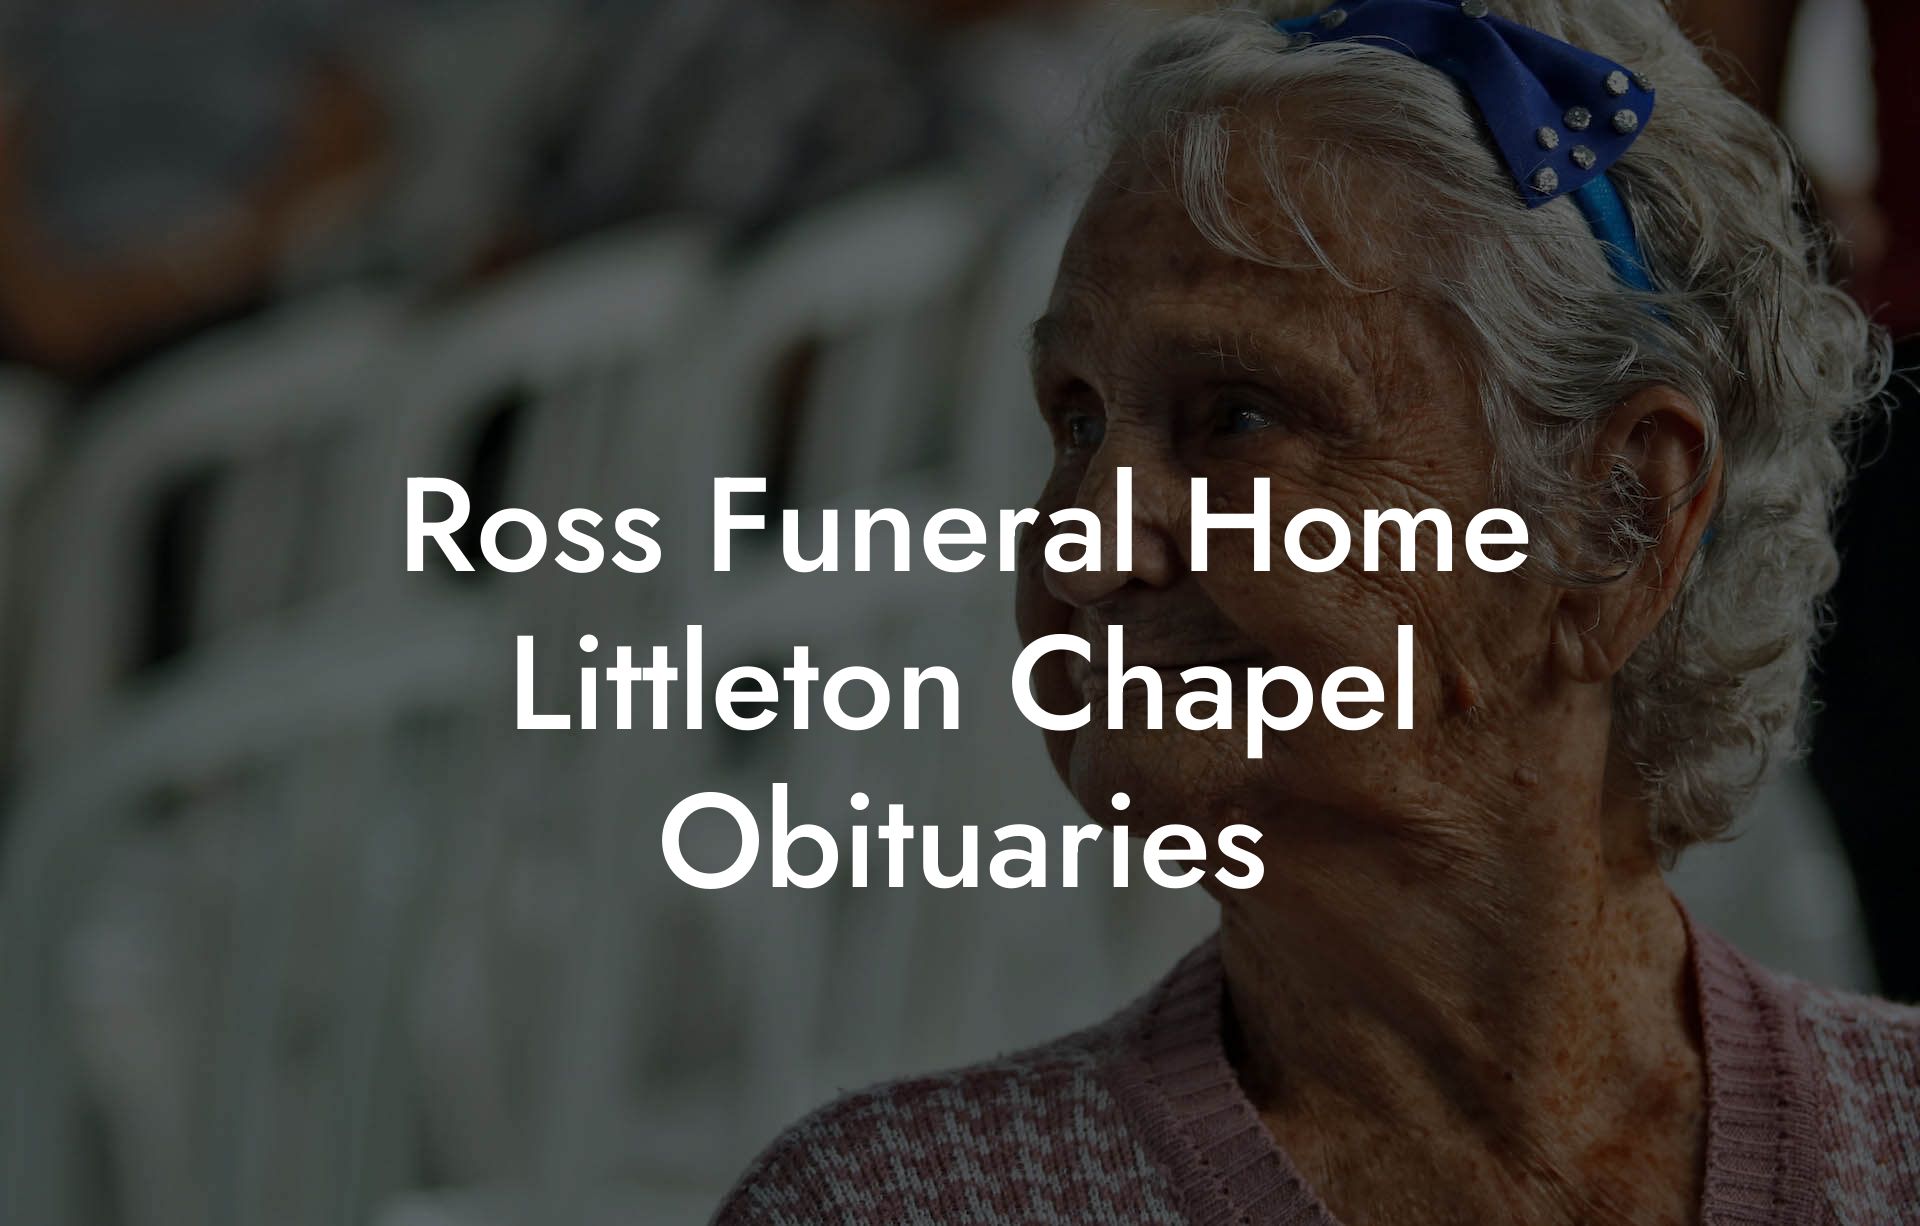 Ross Funeral Home Littleton Chapel Obituaries